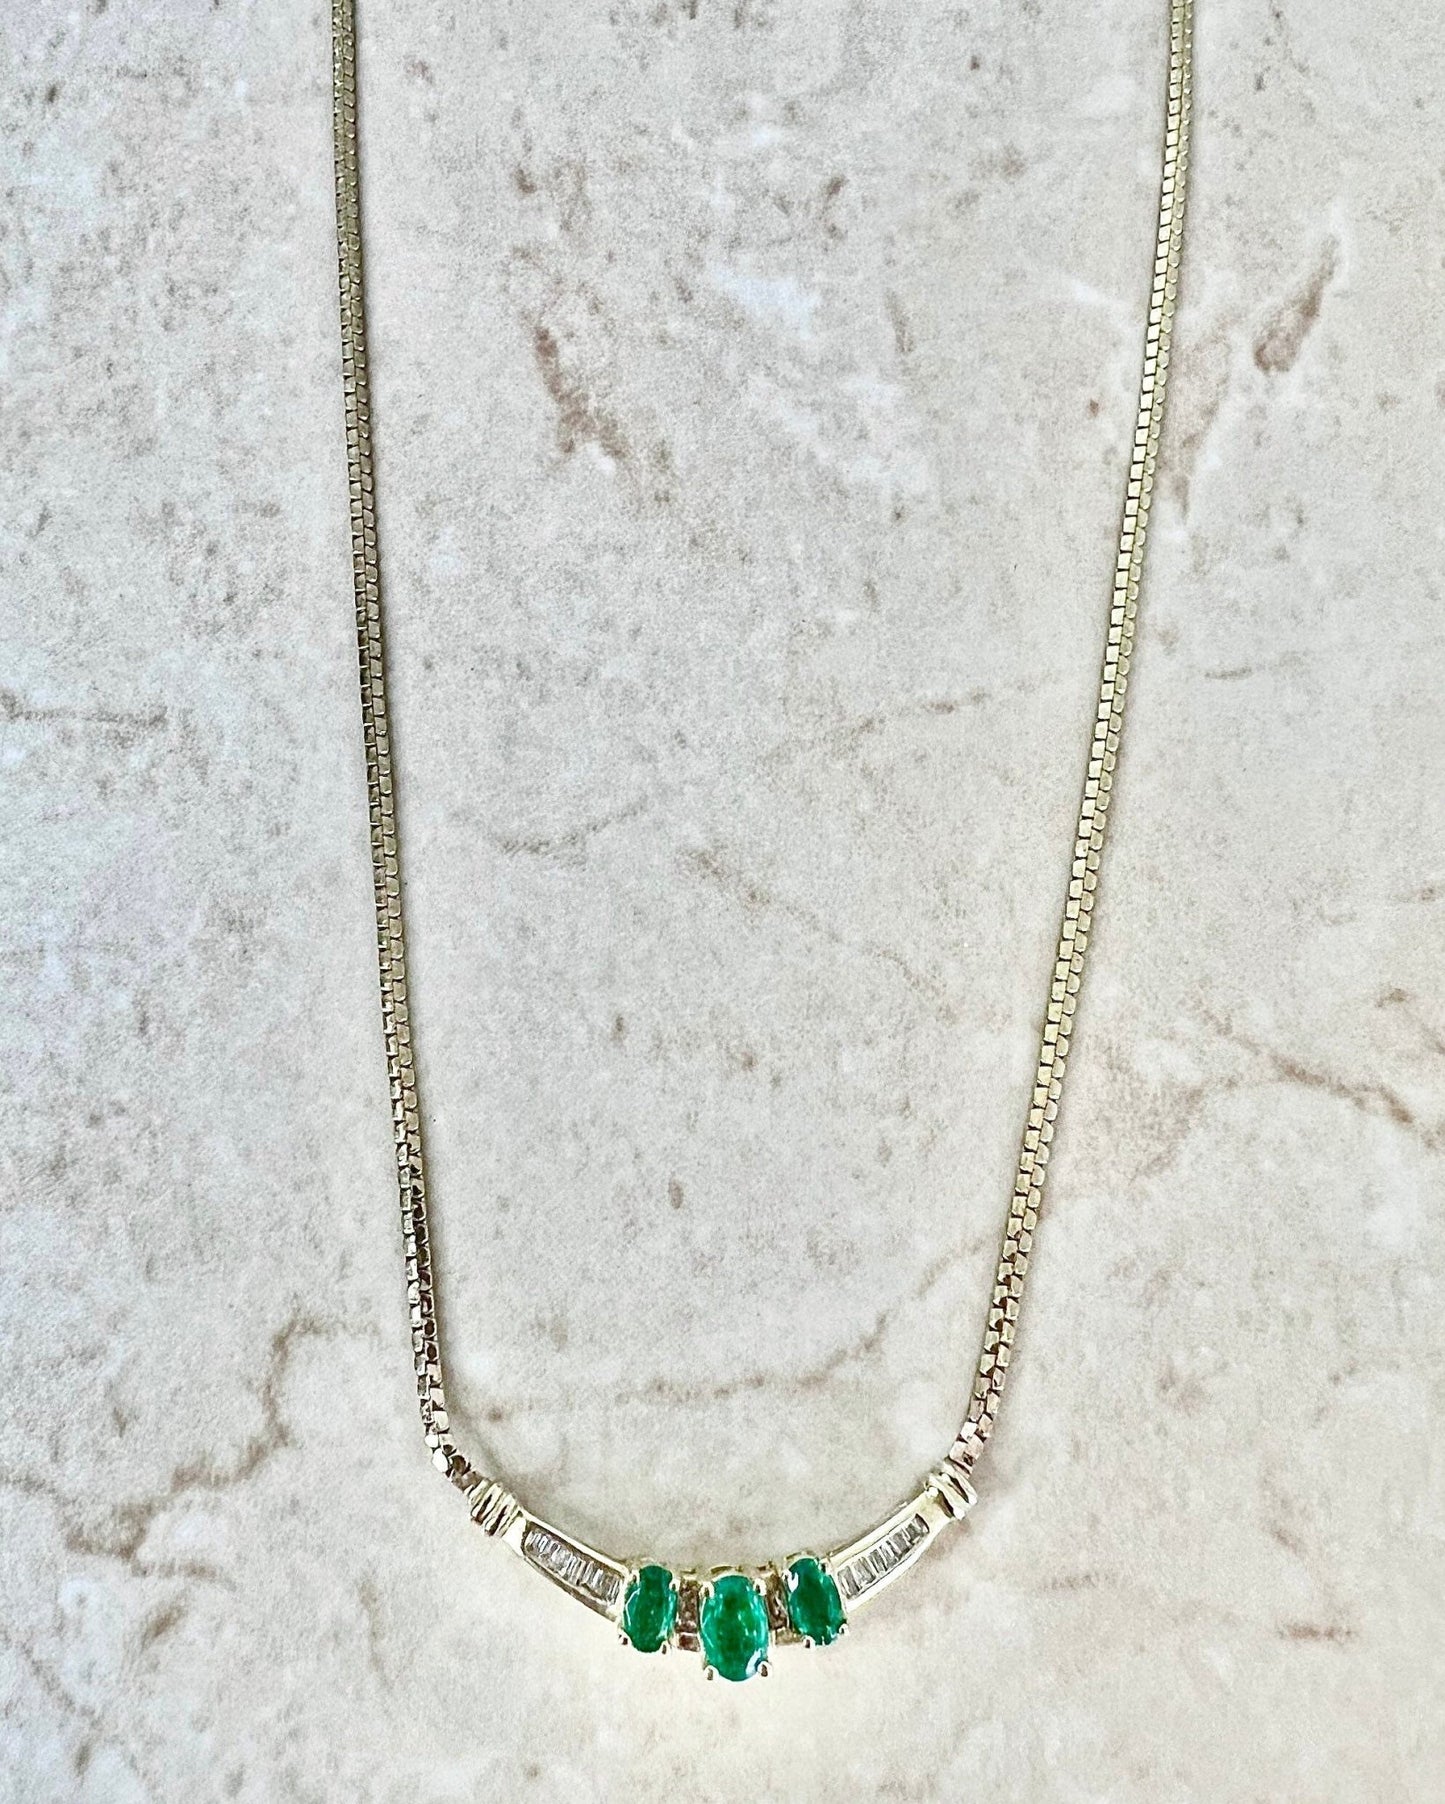 10K Vintage Italian Emerald And Diamond Necklace - 10 Karat Yellow Gold Emerald Pendant - Natural Emerald Necklace - May Birthstone